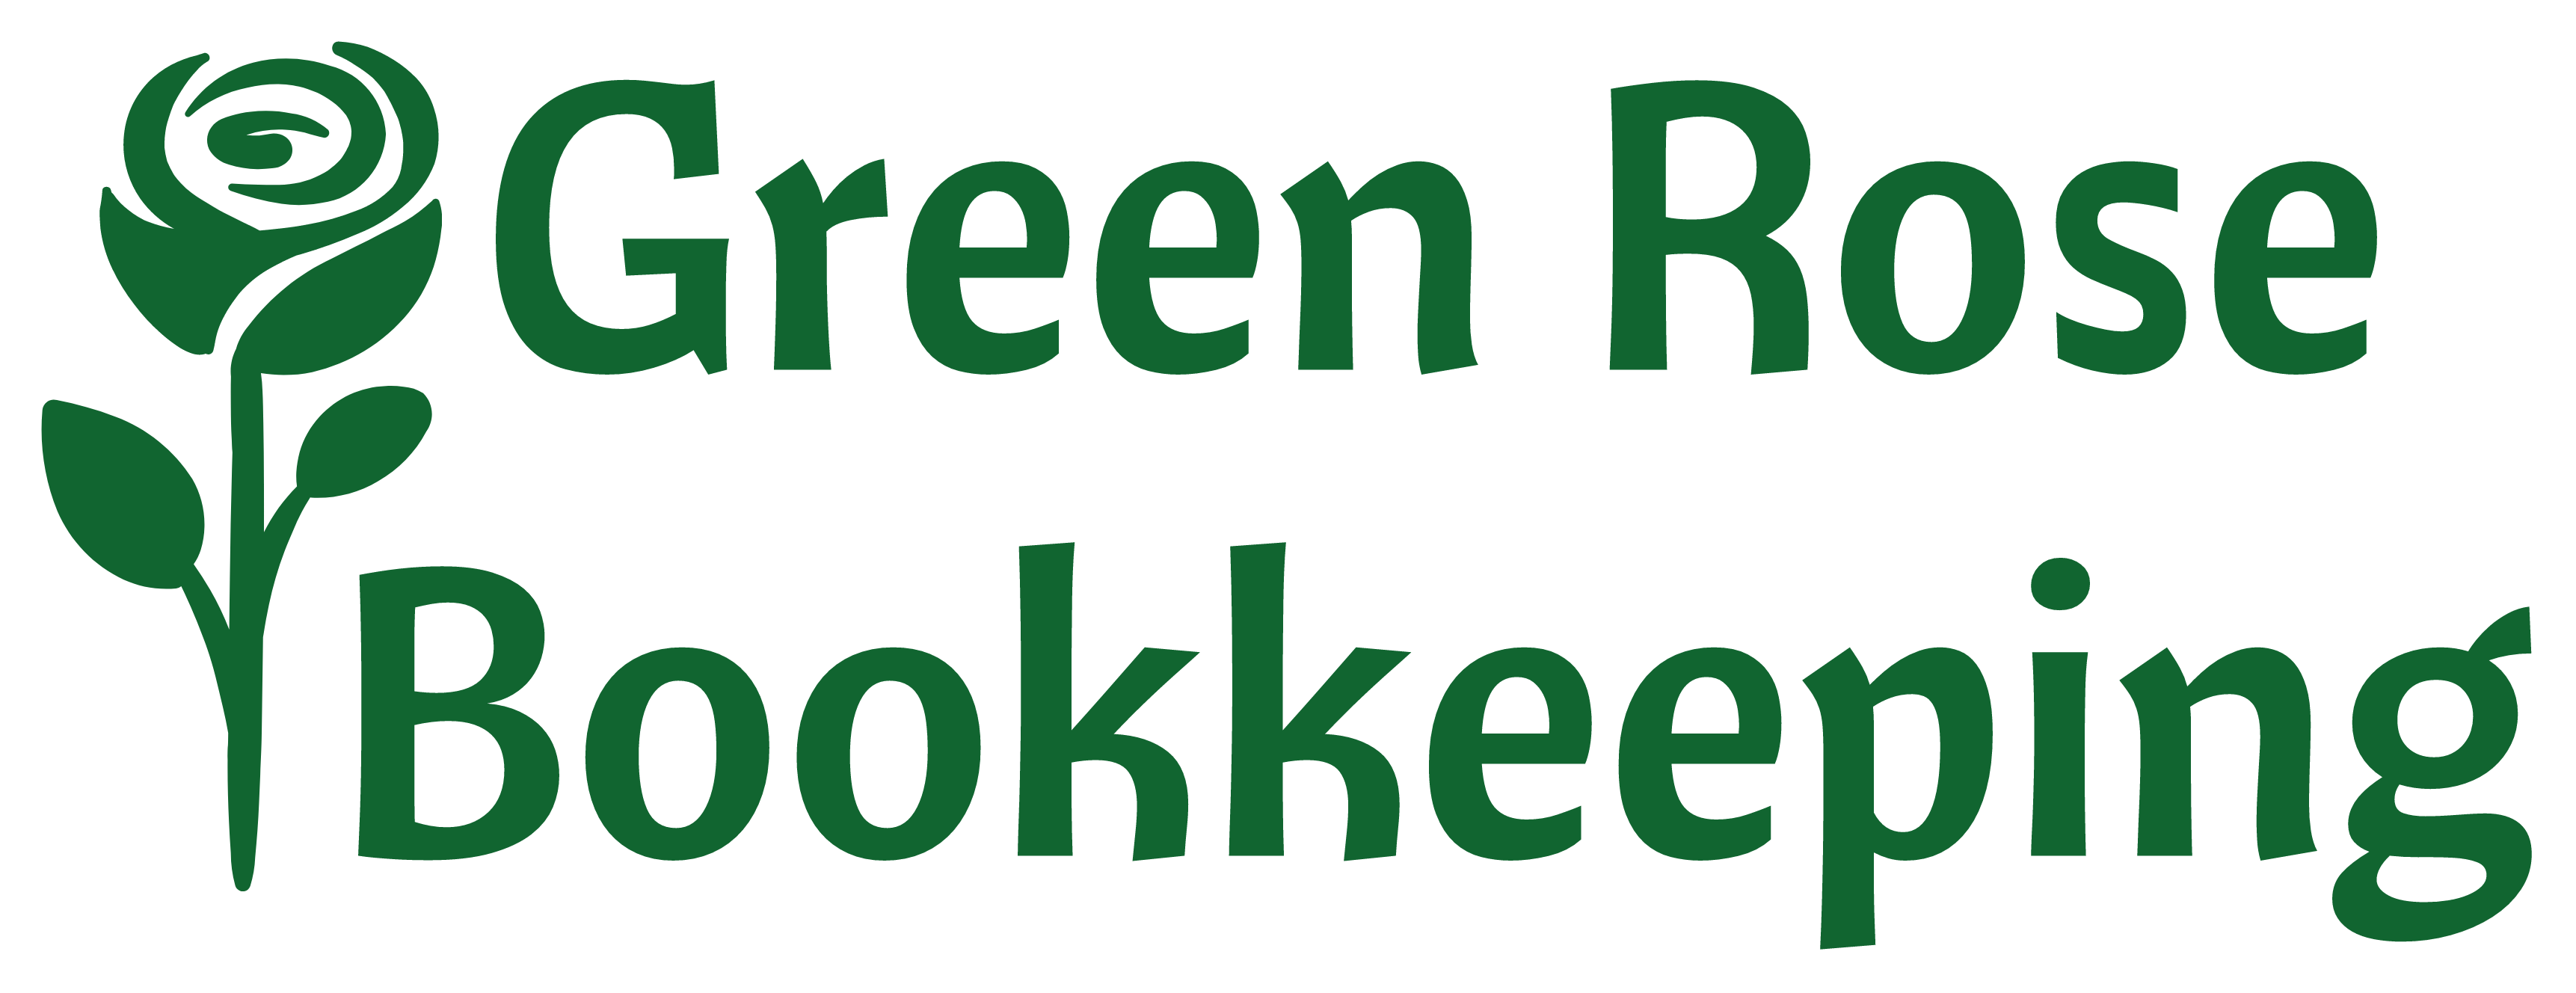 Green Rose Bookkeeping